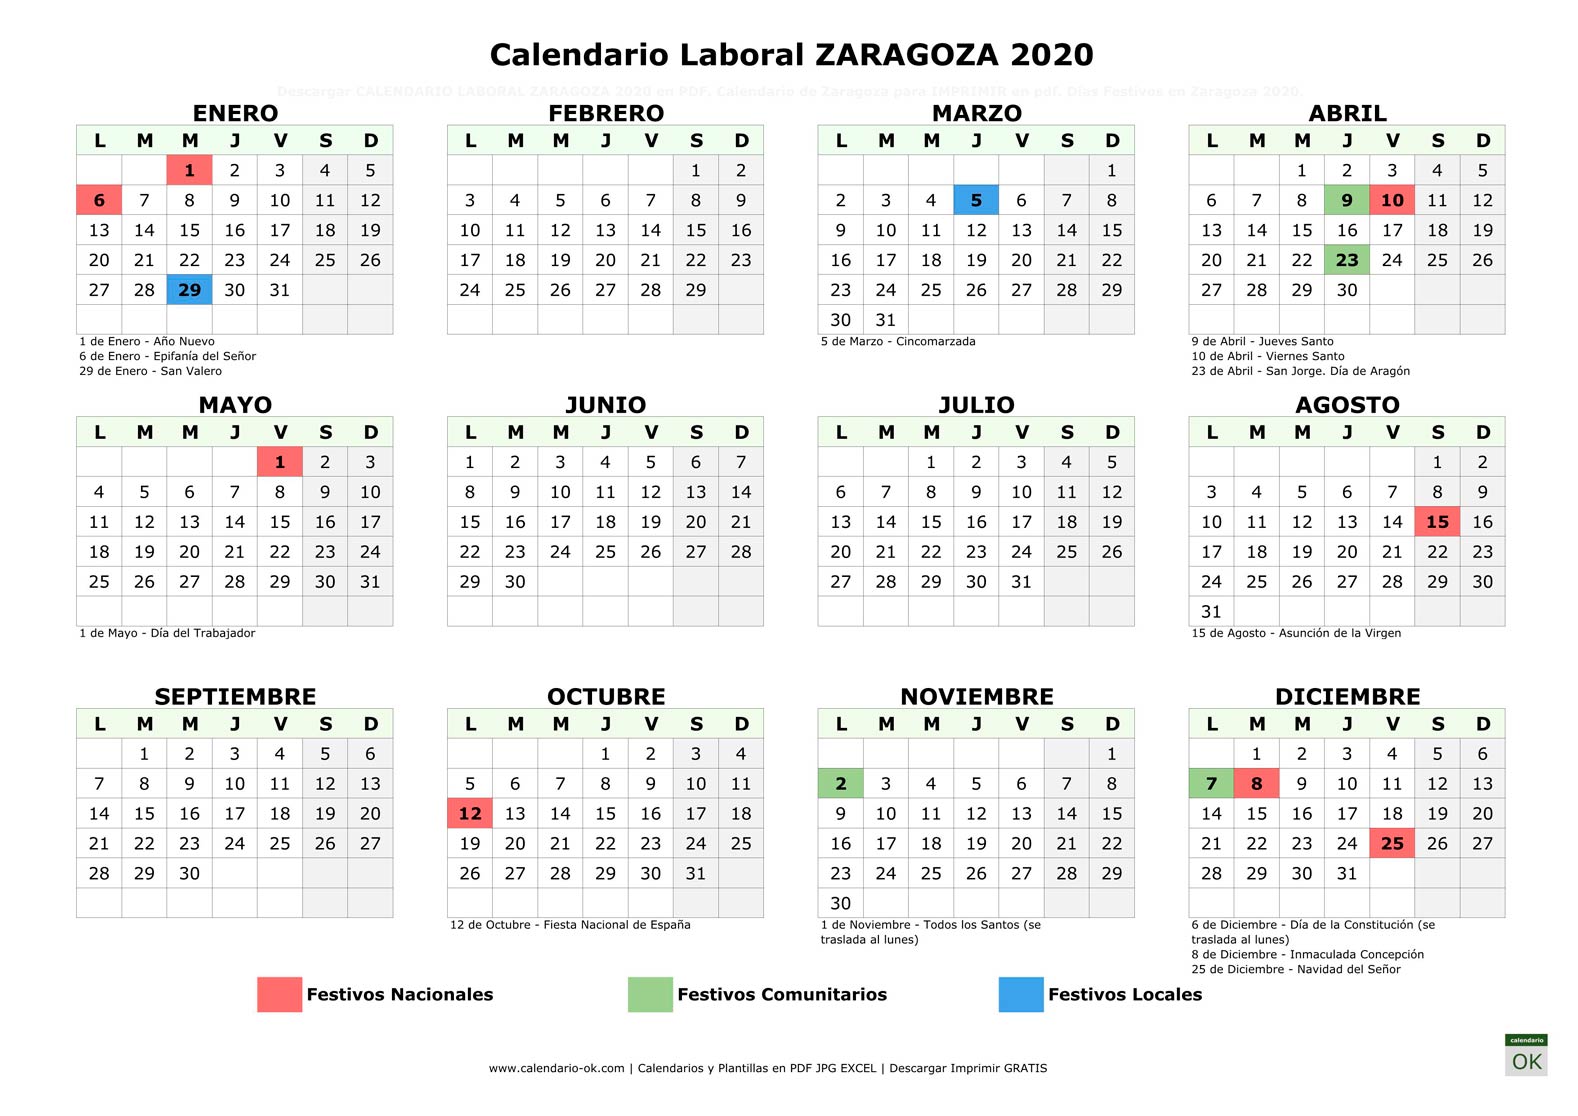 Calendario Laboral ZARAGOZA 2020 horizontal